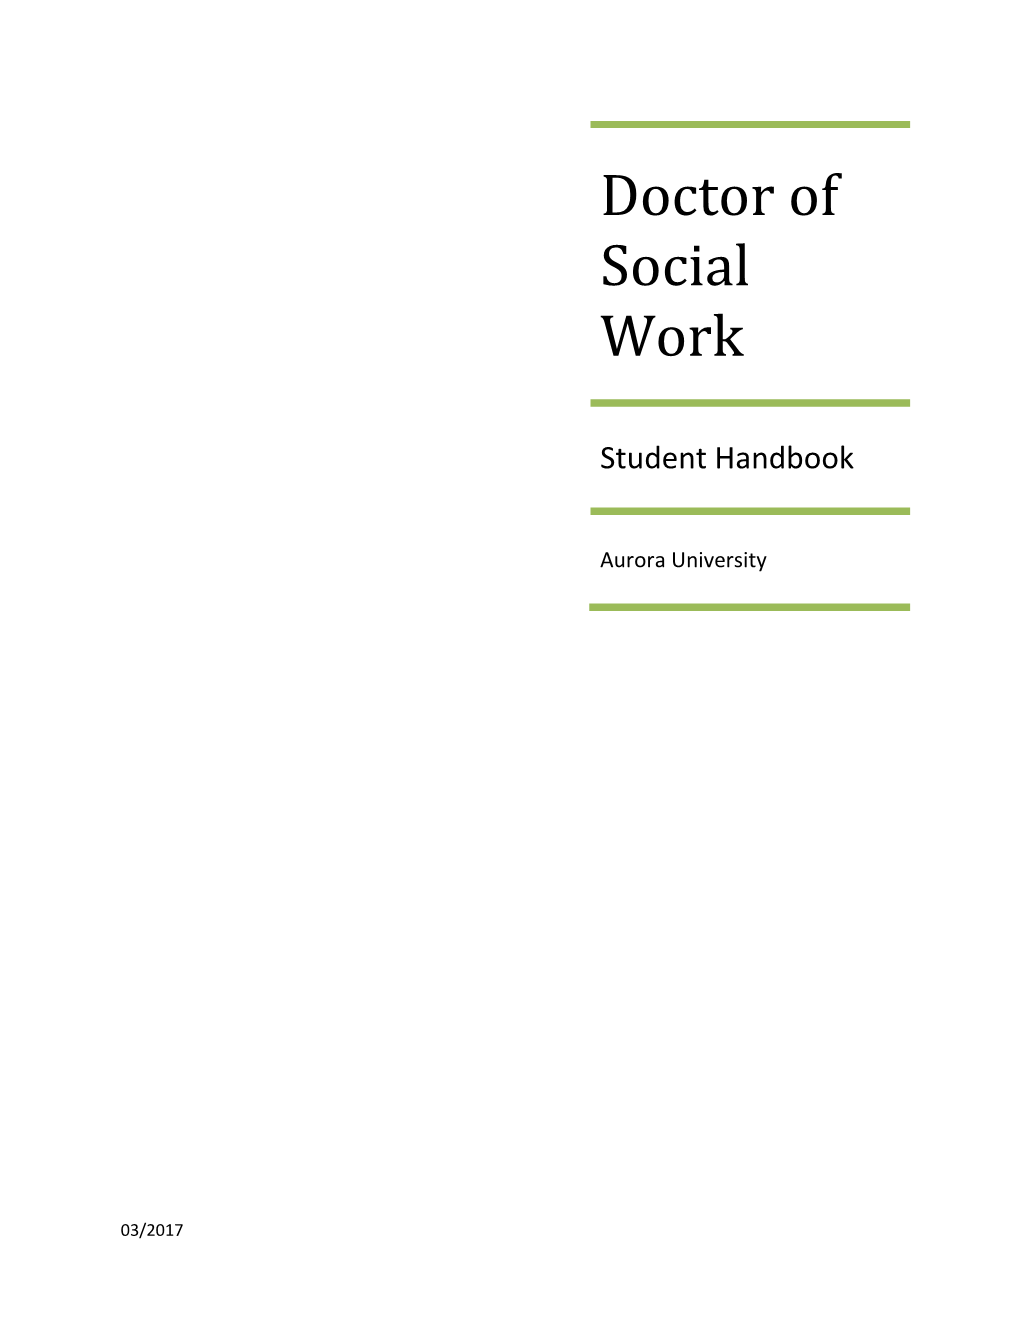 Doctor of Social Work